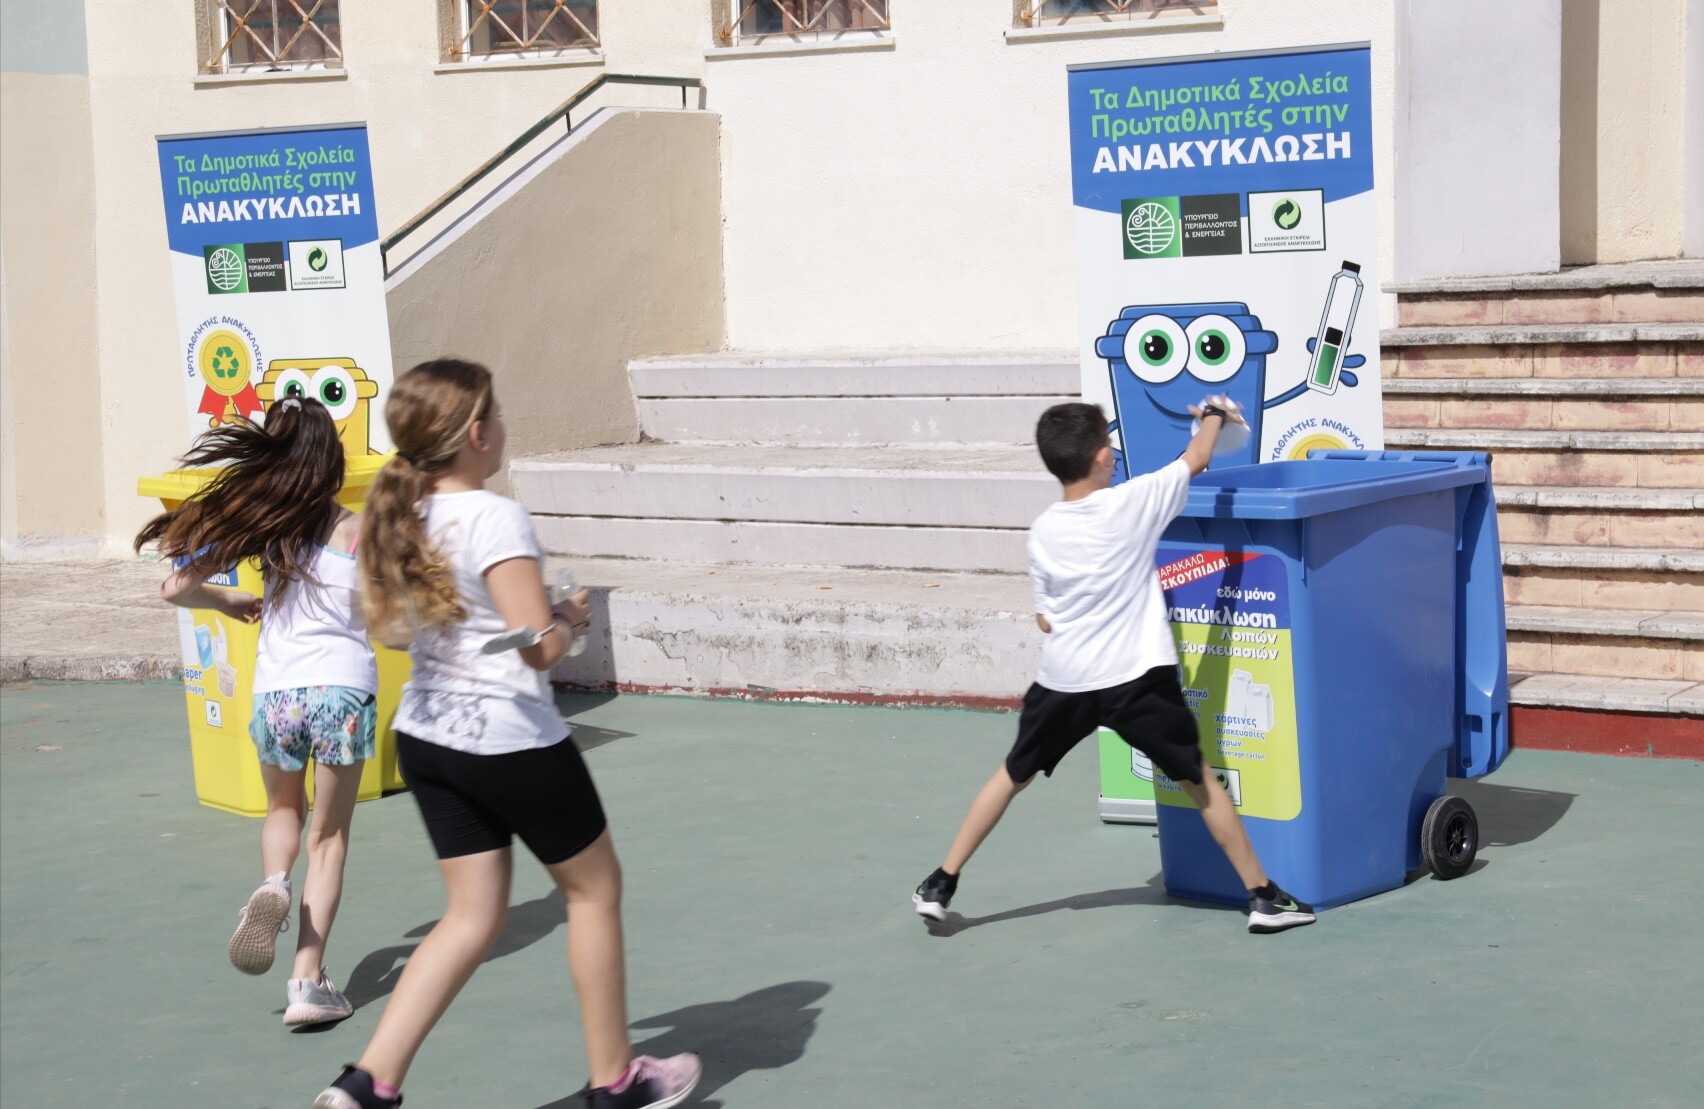 More information about "Πρόγραμμα Περιβαλλοντικής Εκπαίδευσης: «Τα δημοτικά σχολεία πρωταθλητές στην ανακύκλωση»"